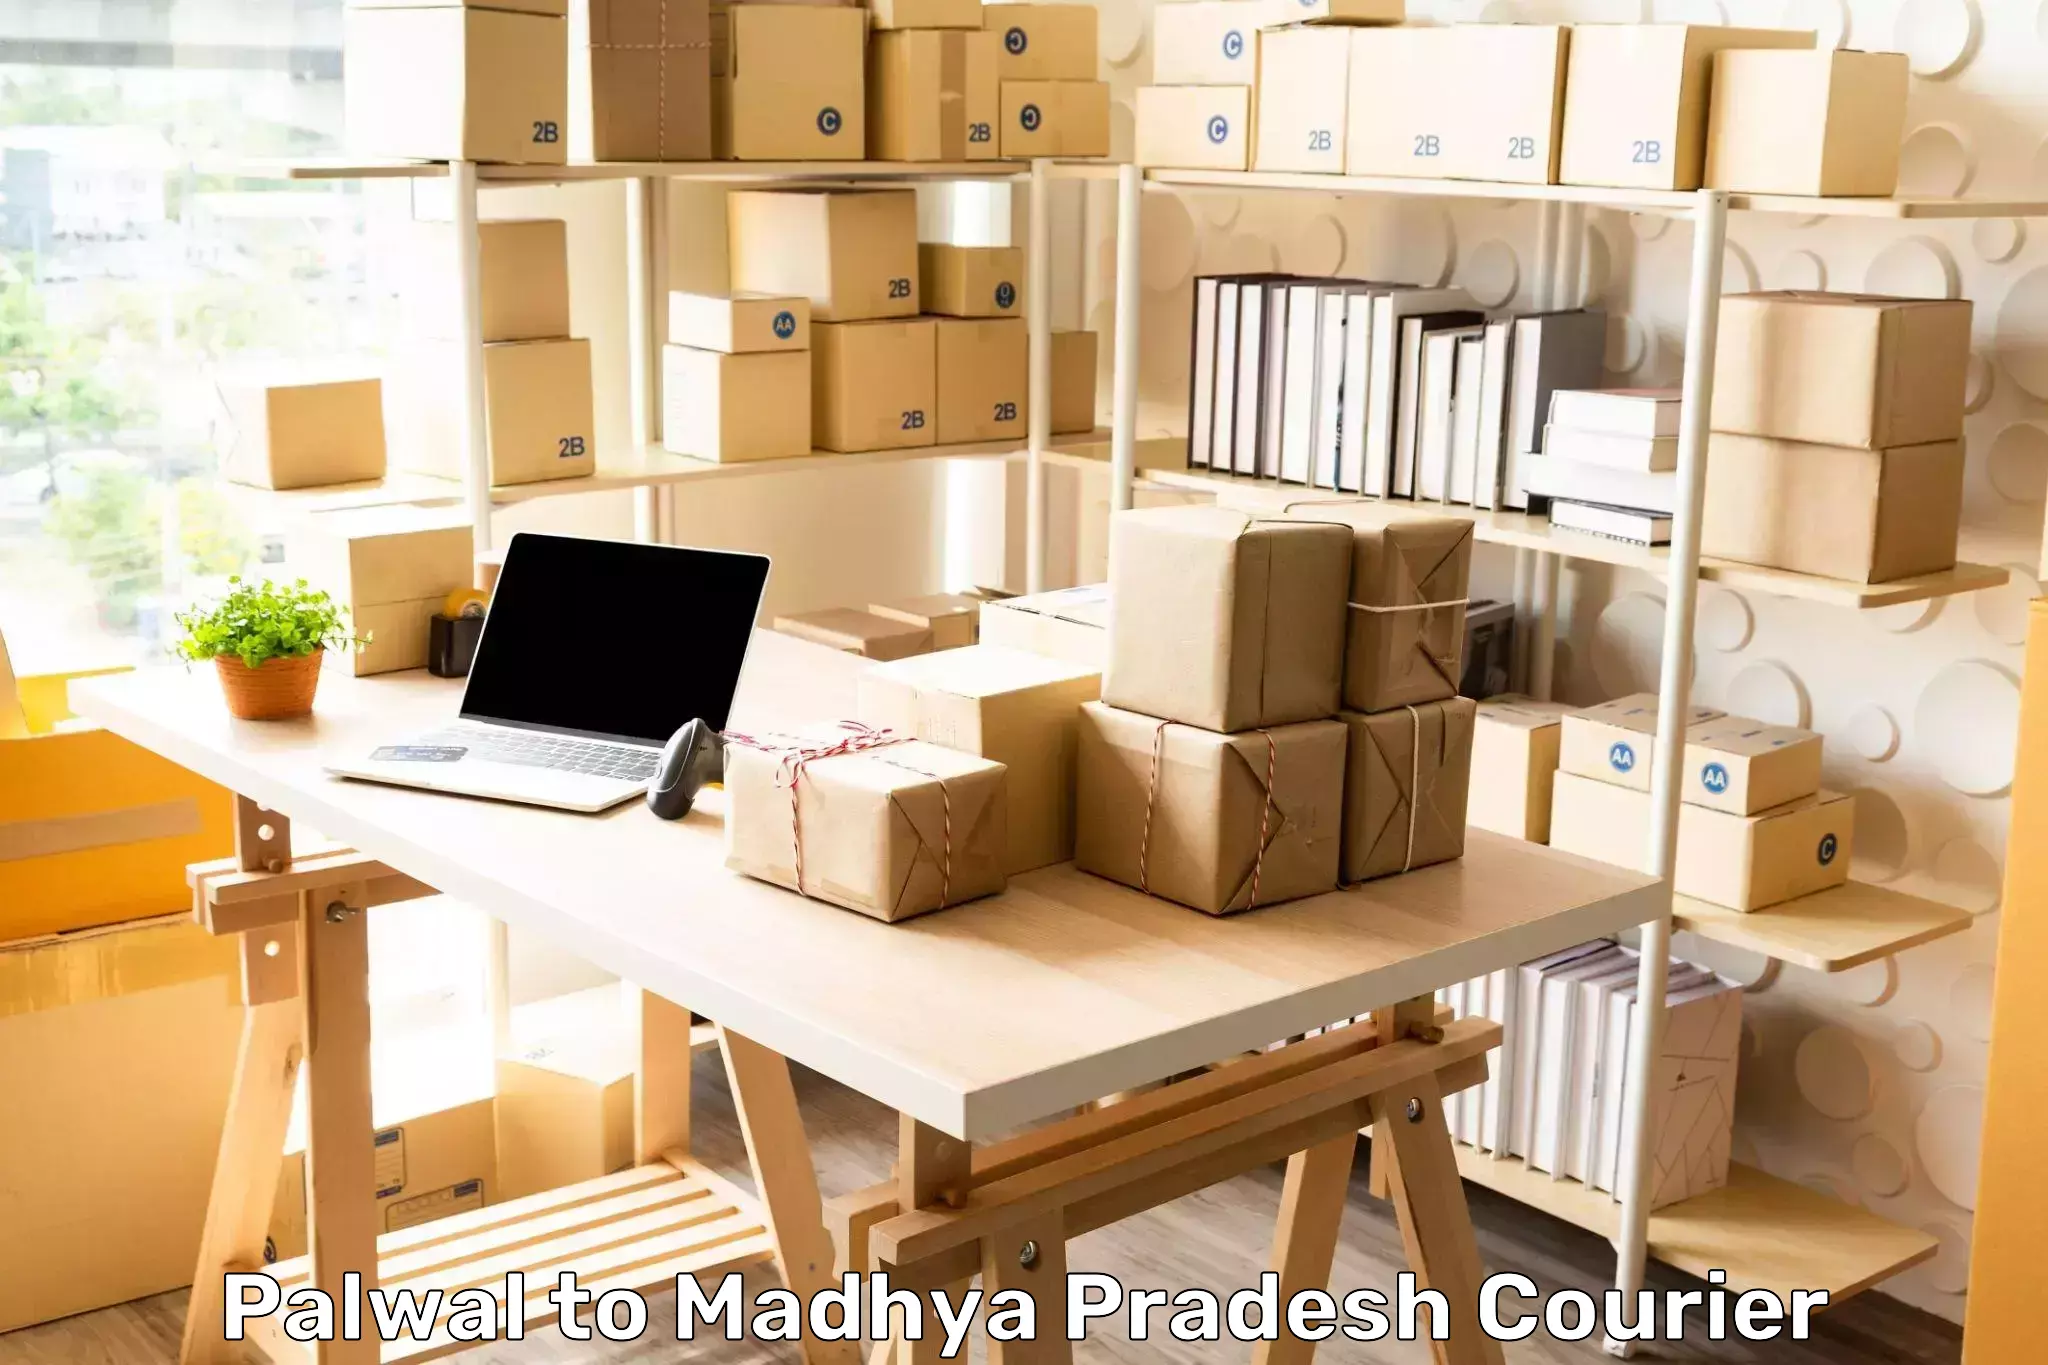 International courier networks Palwal to Madhya Pradesh